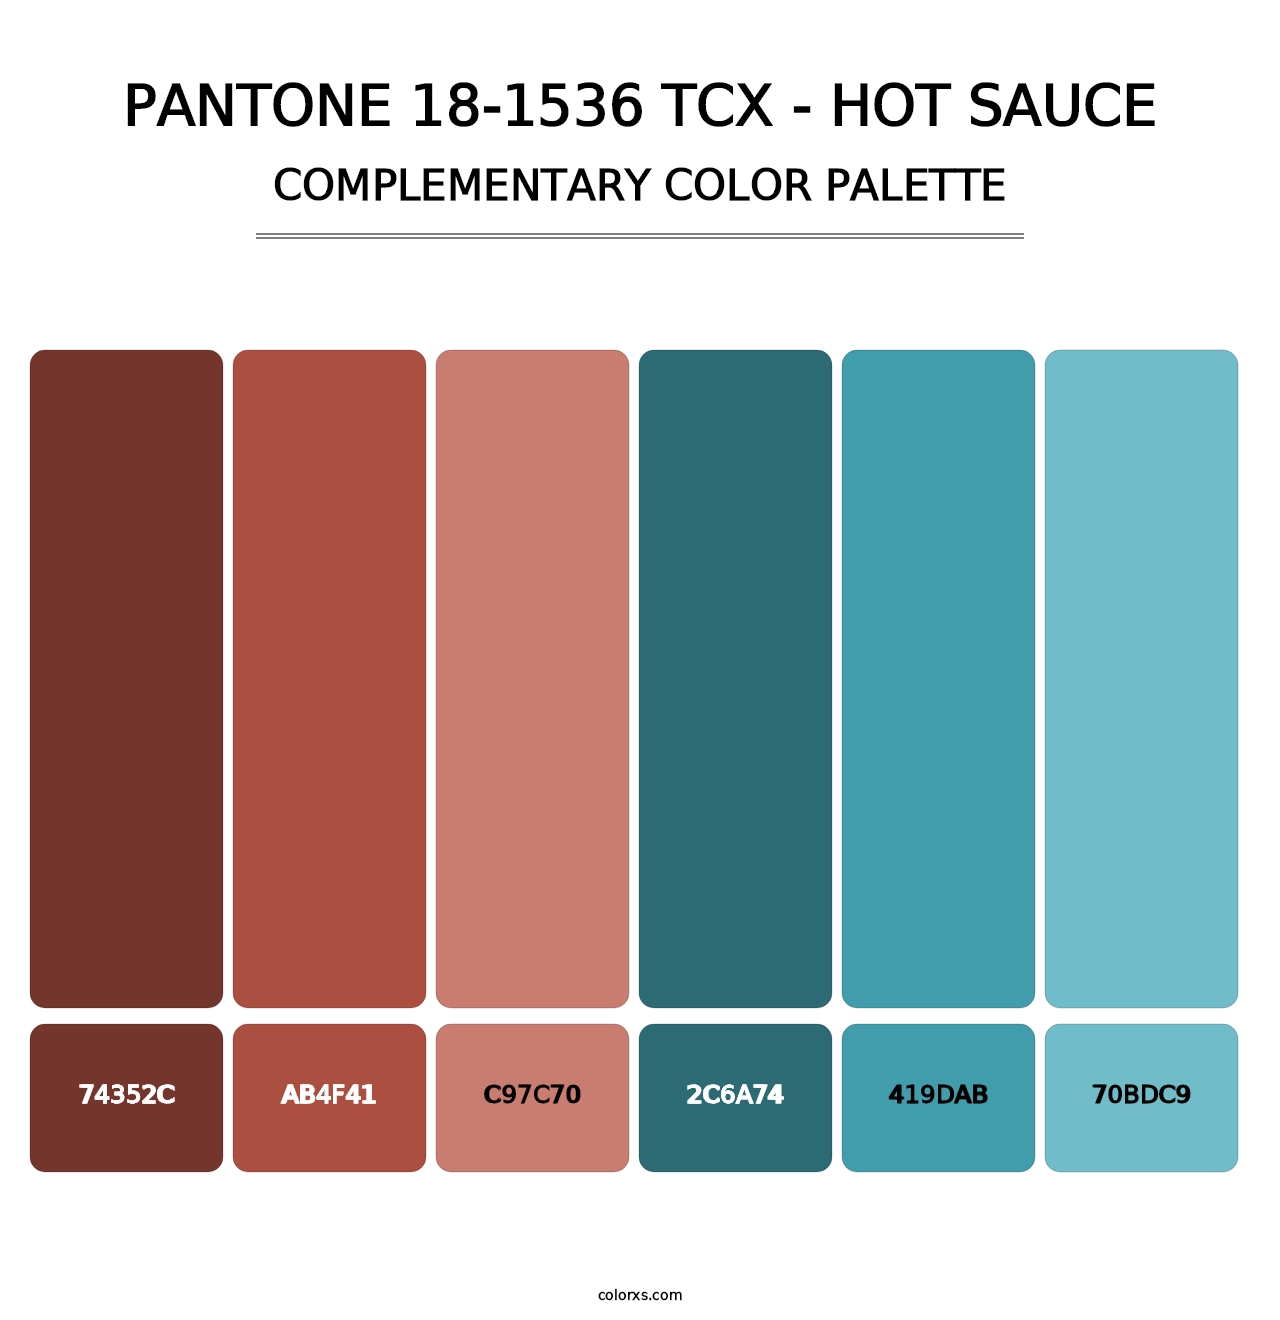 PANTONE 18-1536 TCX - Hot Sauce - Complementary Color Palette